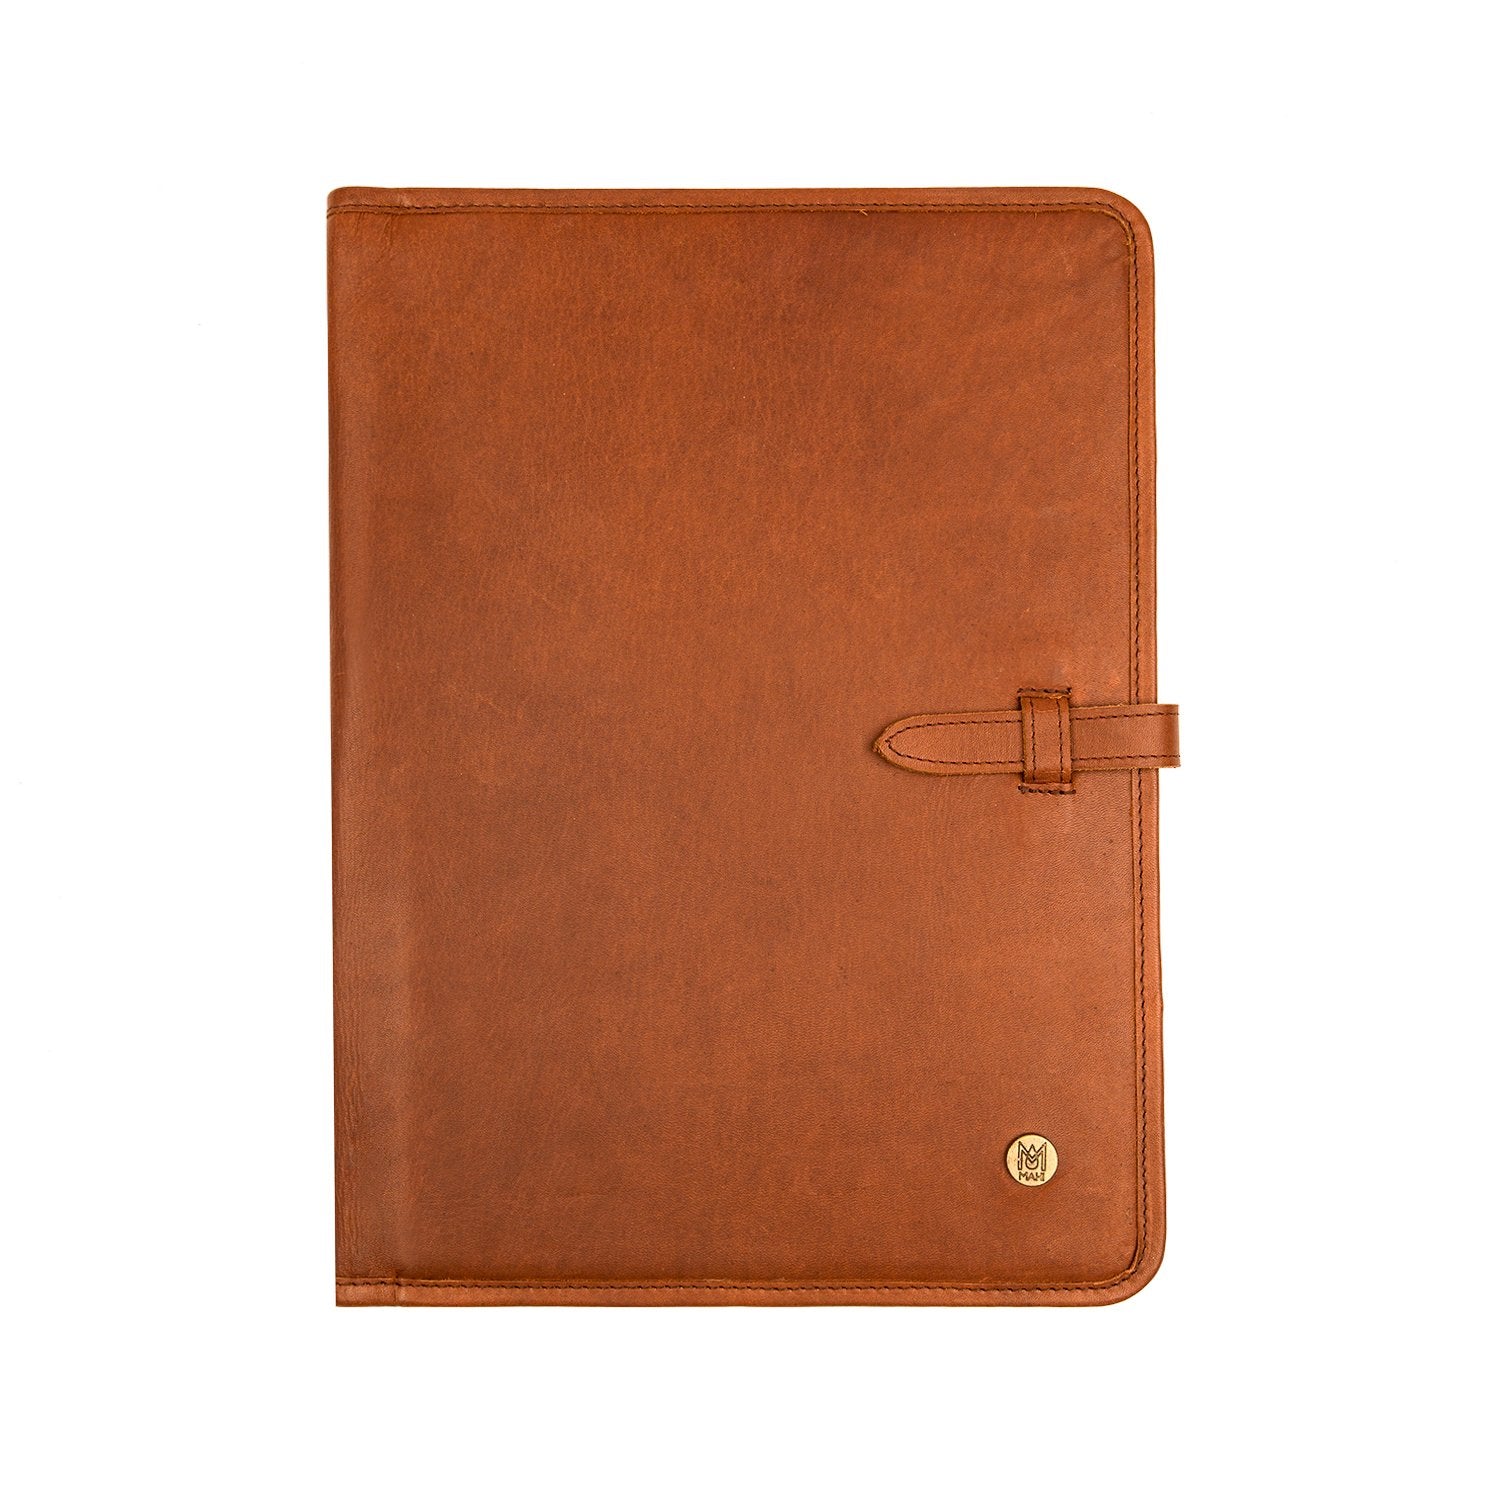 Green portfolio A4, Document holder, Italian leather portfolio